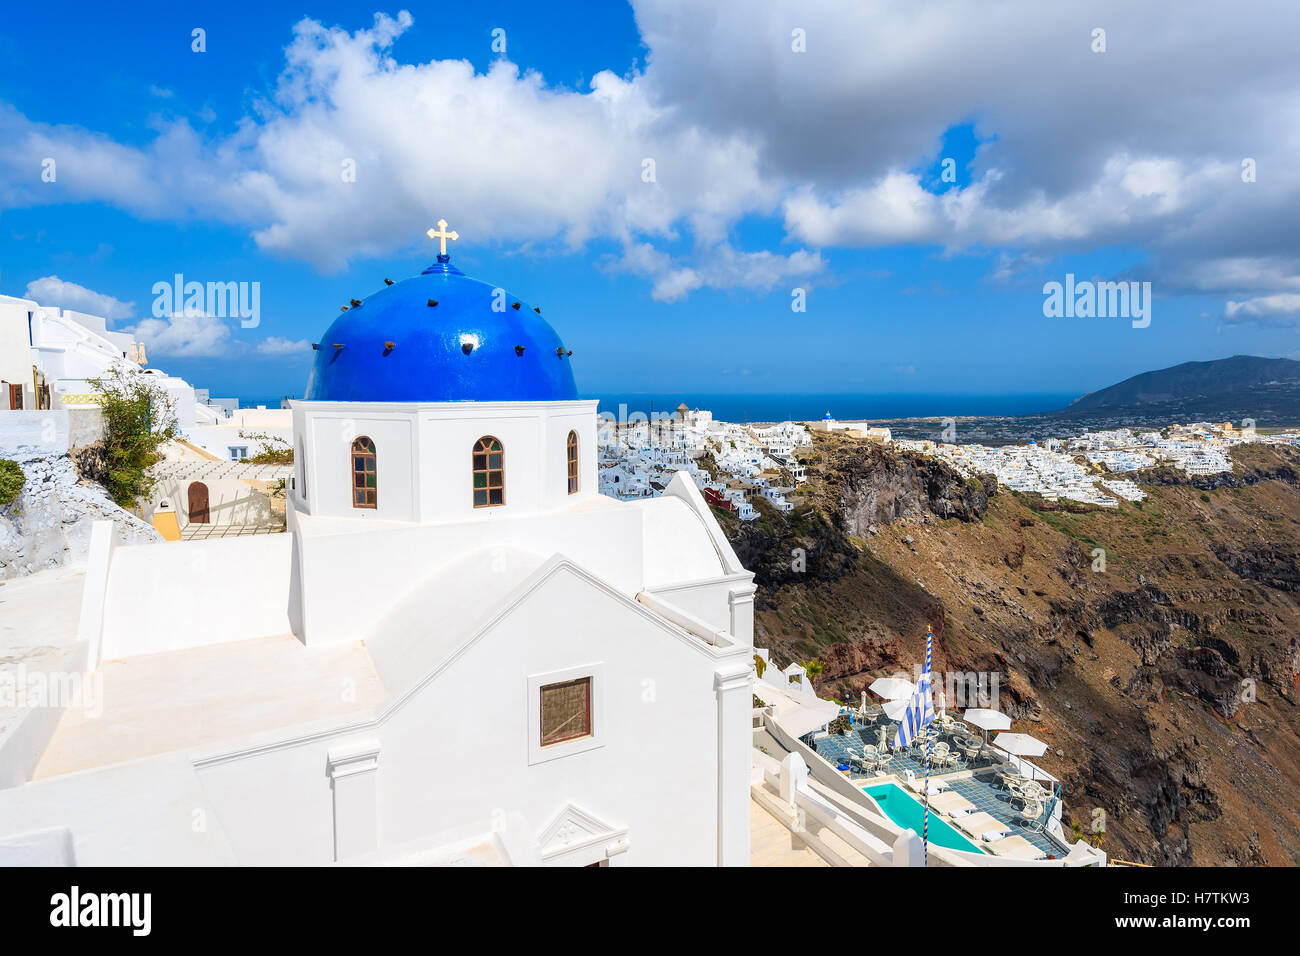 Blue dome of church in Imerovigli village and view of blue sea with caldera on Santorini island, Greece Stock Photo